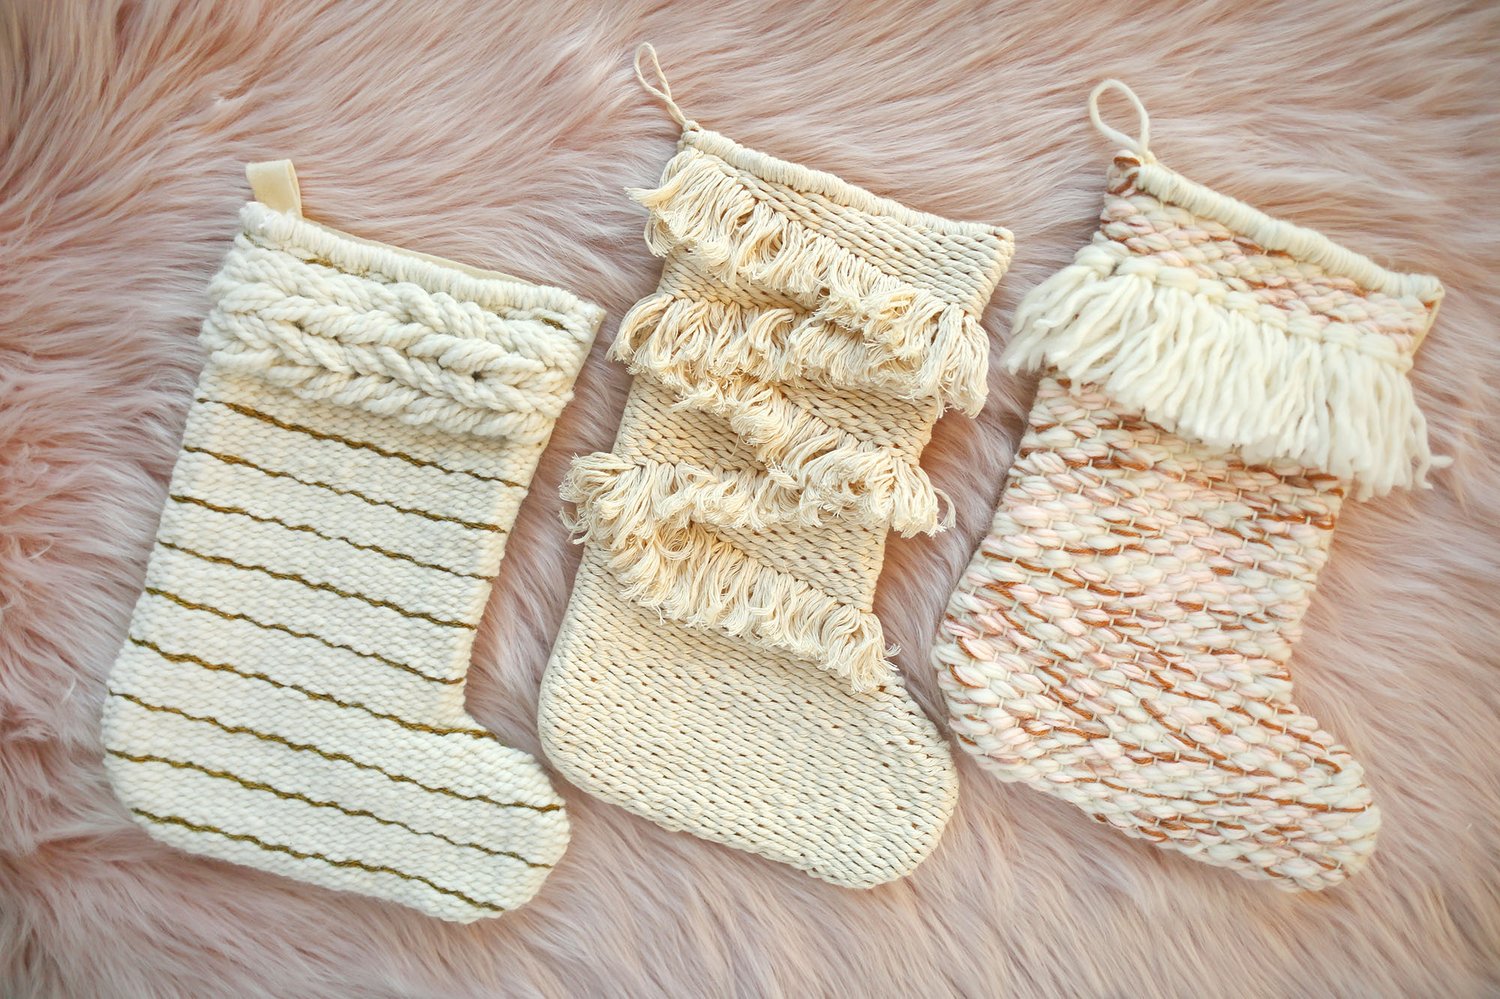 Image of Woven: Stockings Three Ways eCourse